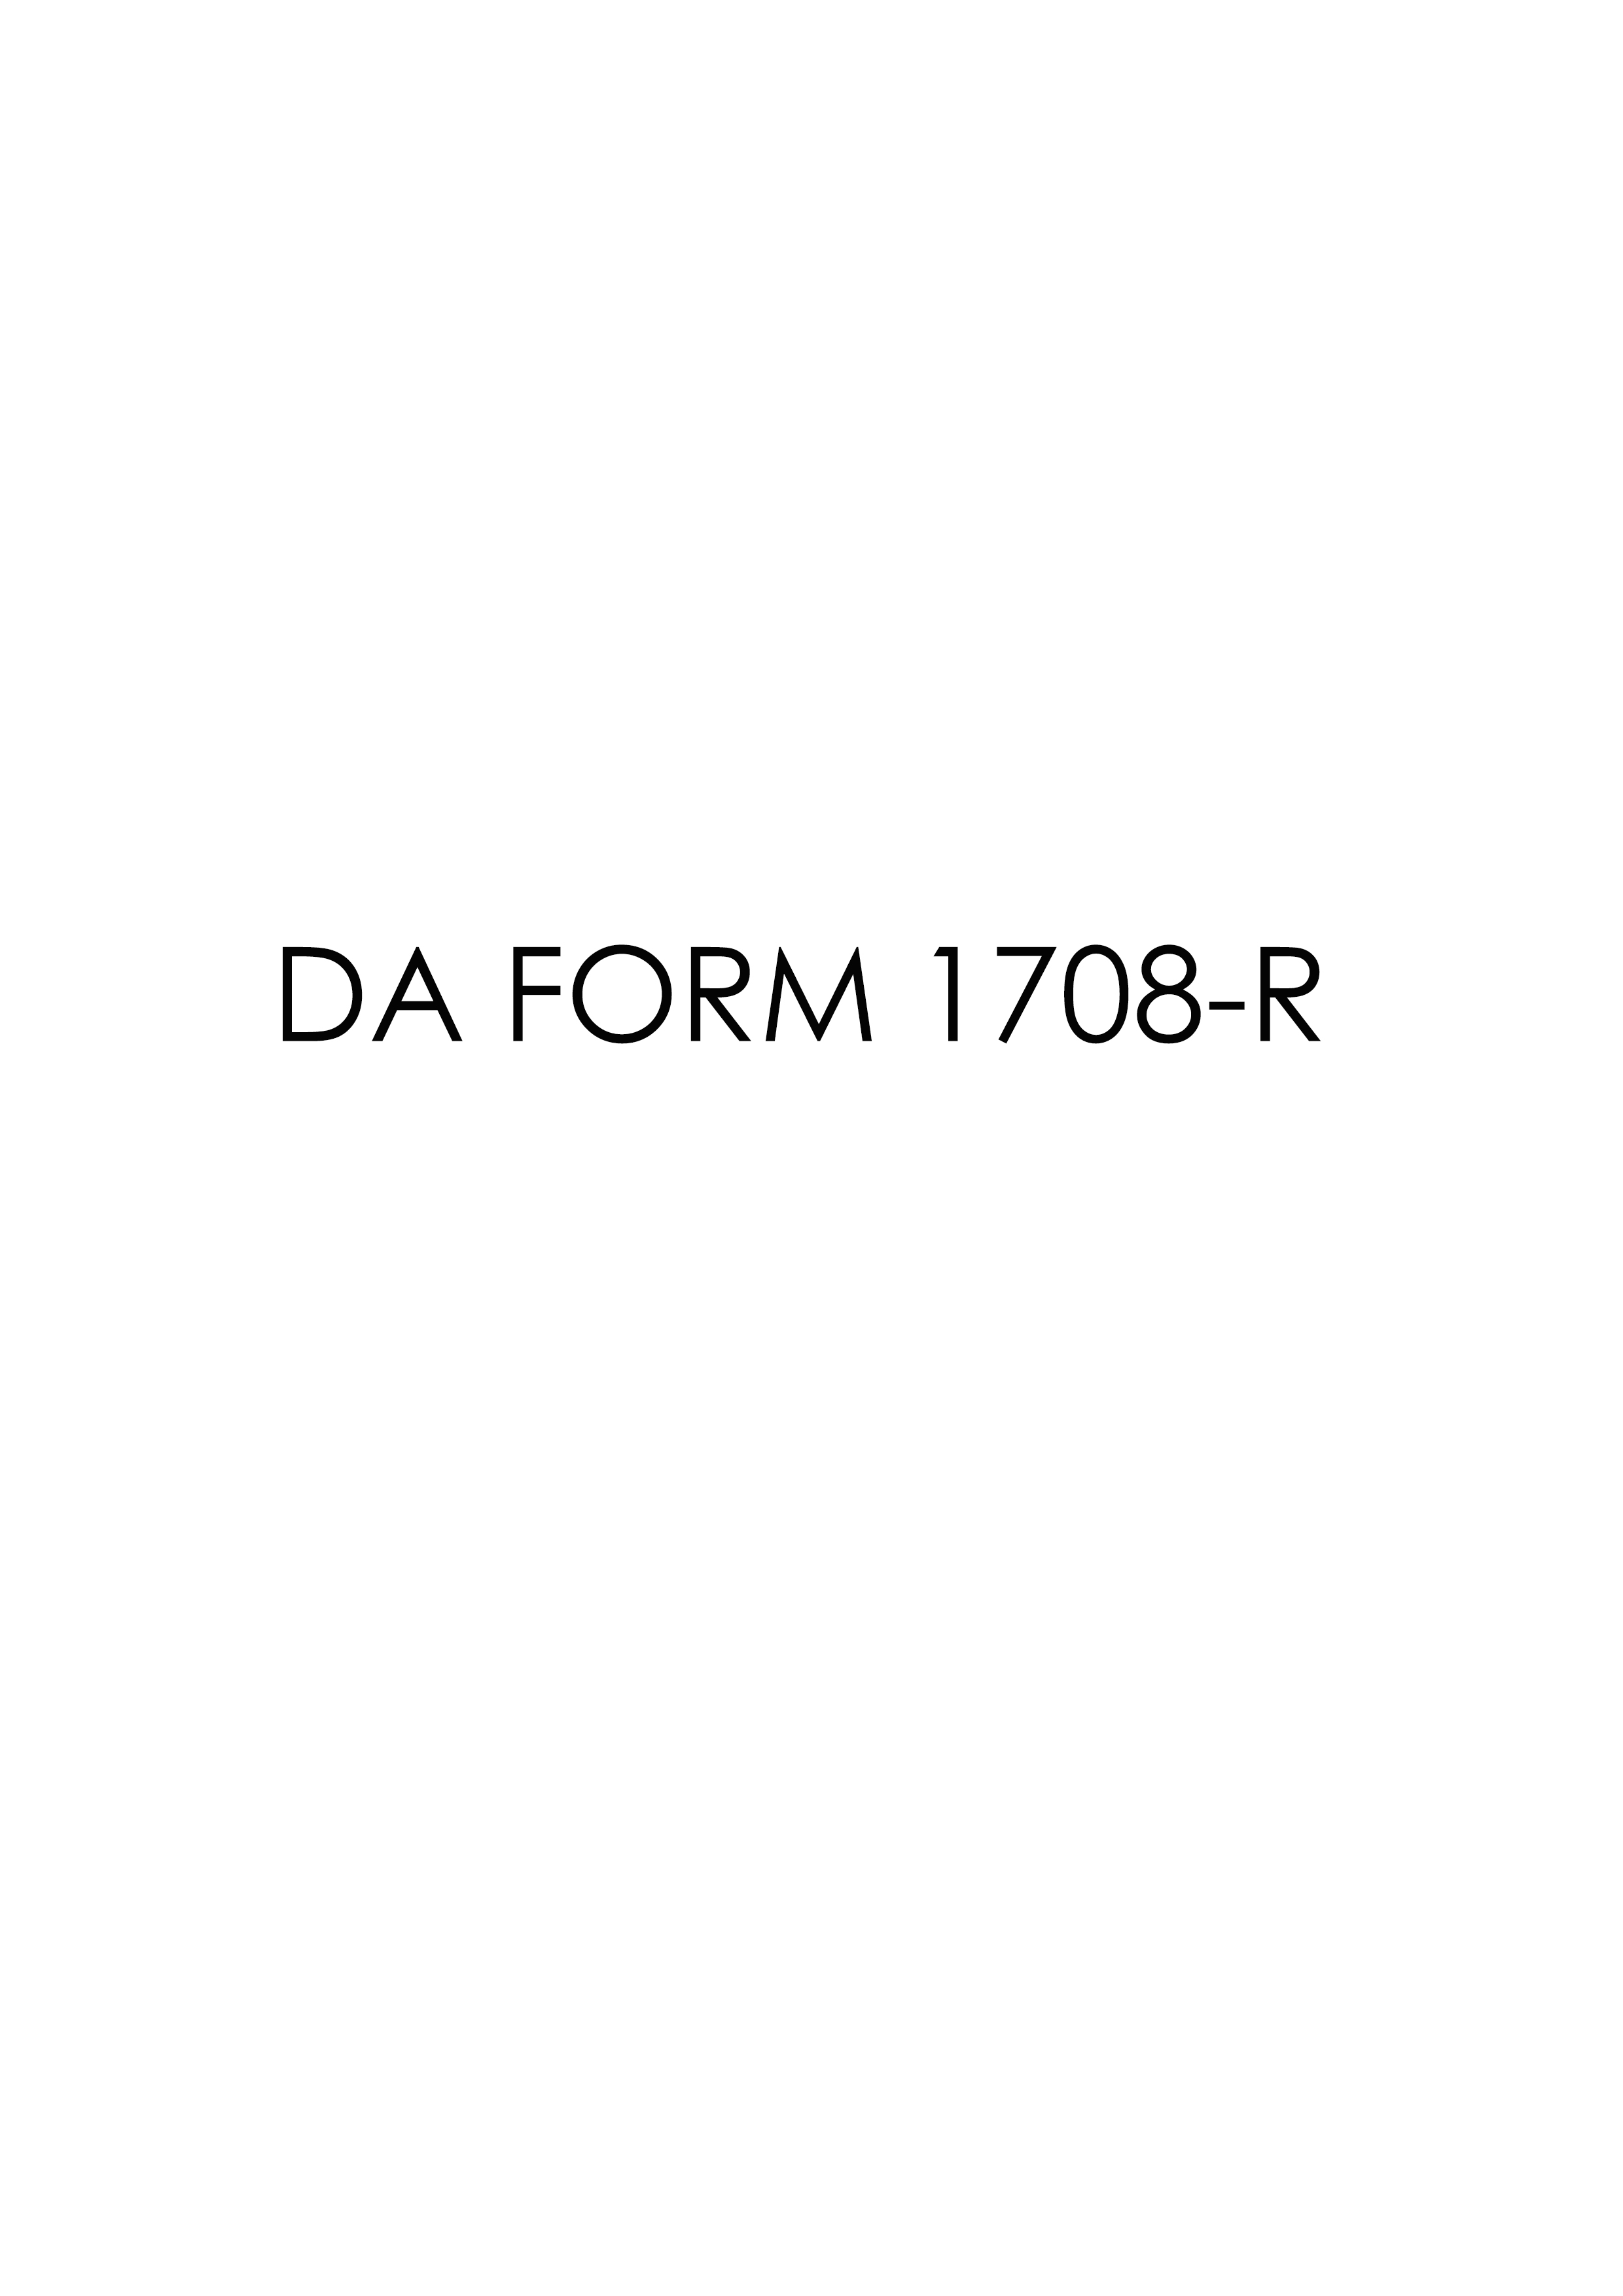 Download da 1708-R Form Free